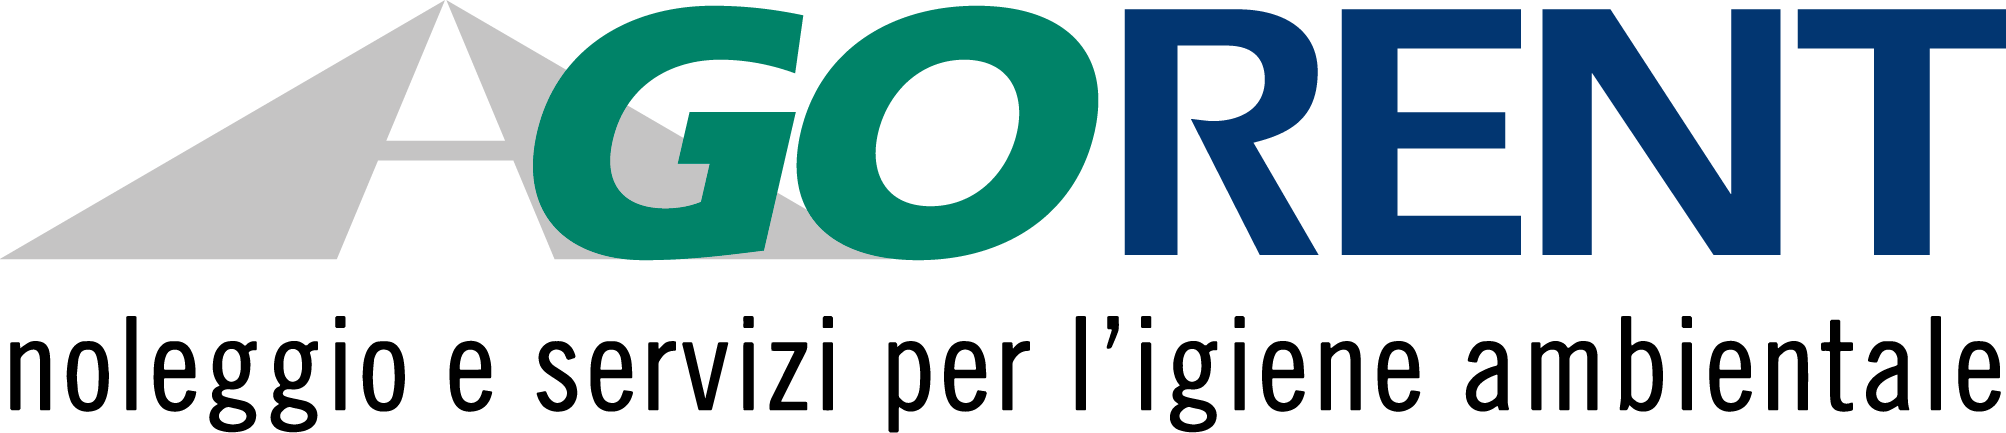 Gorent logo